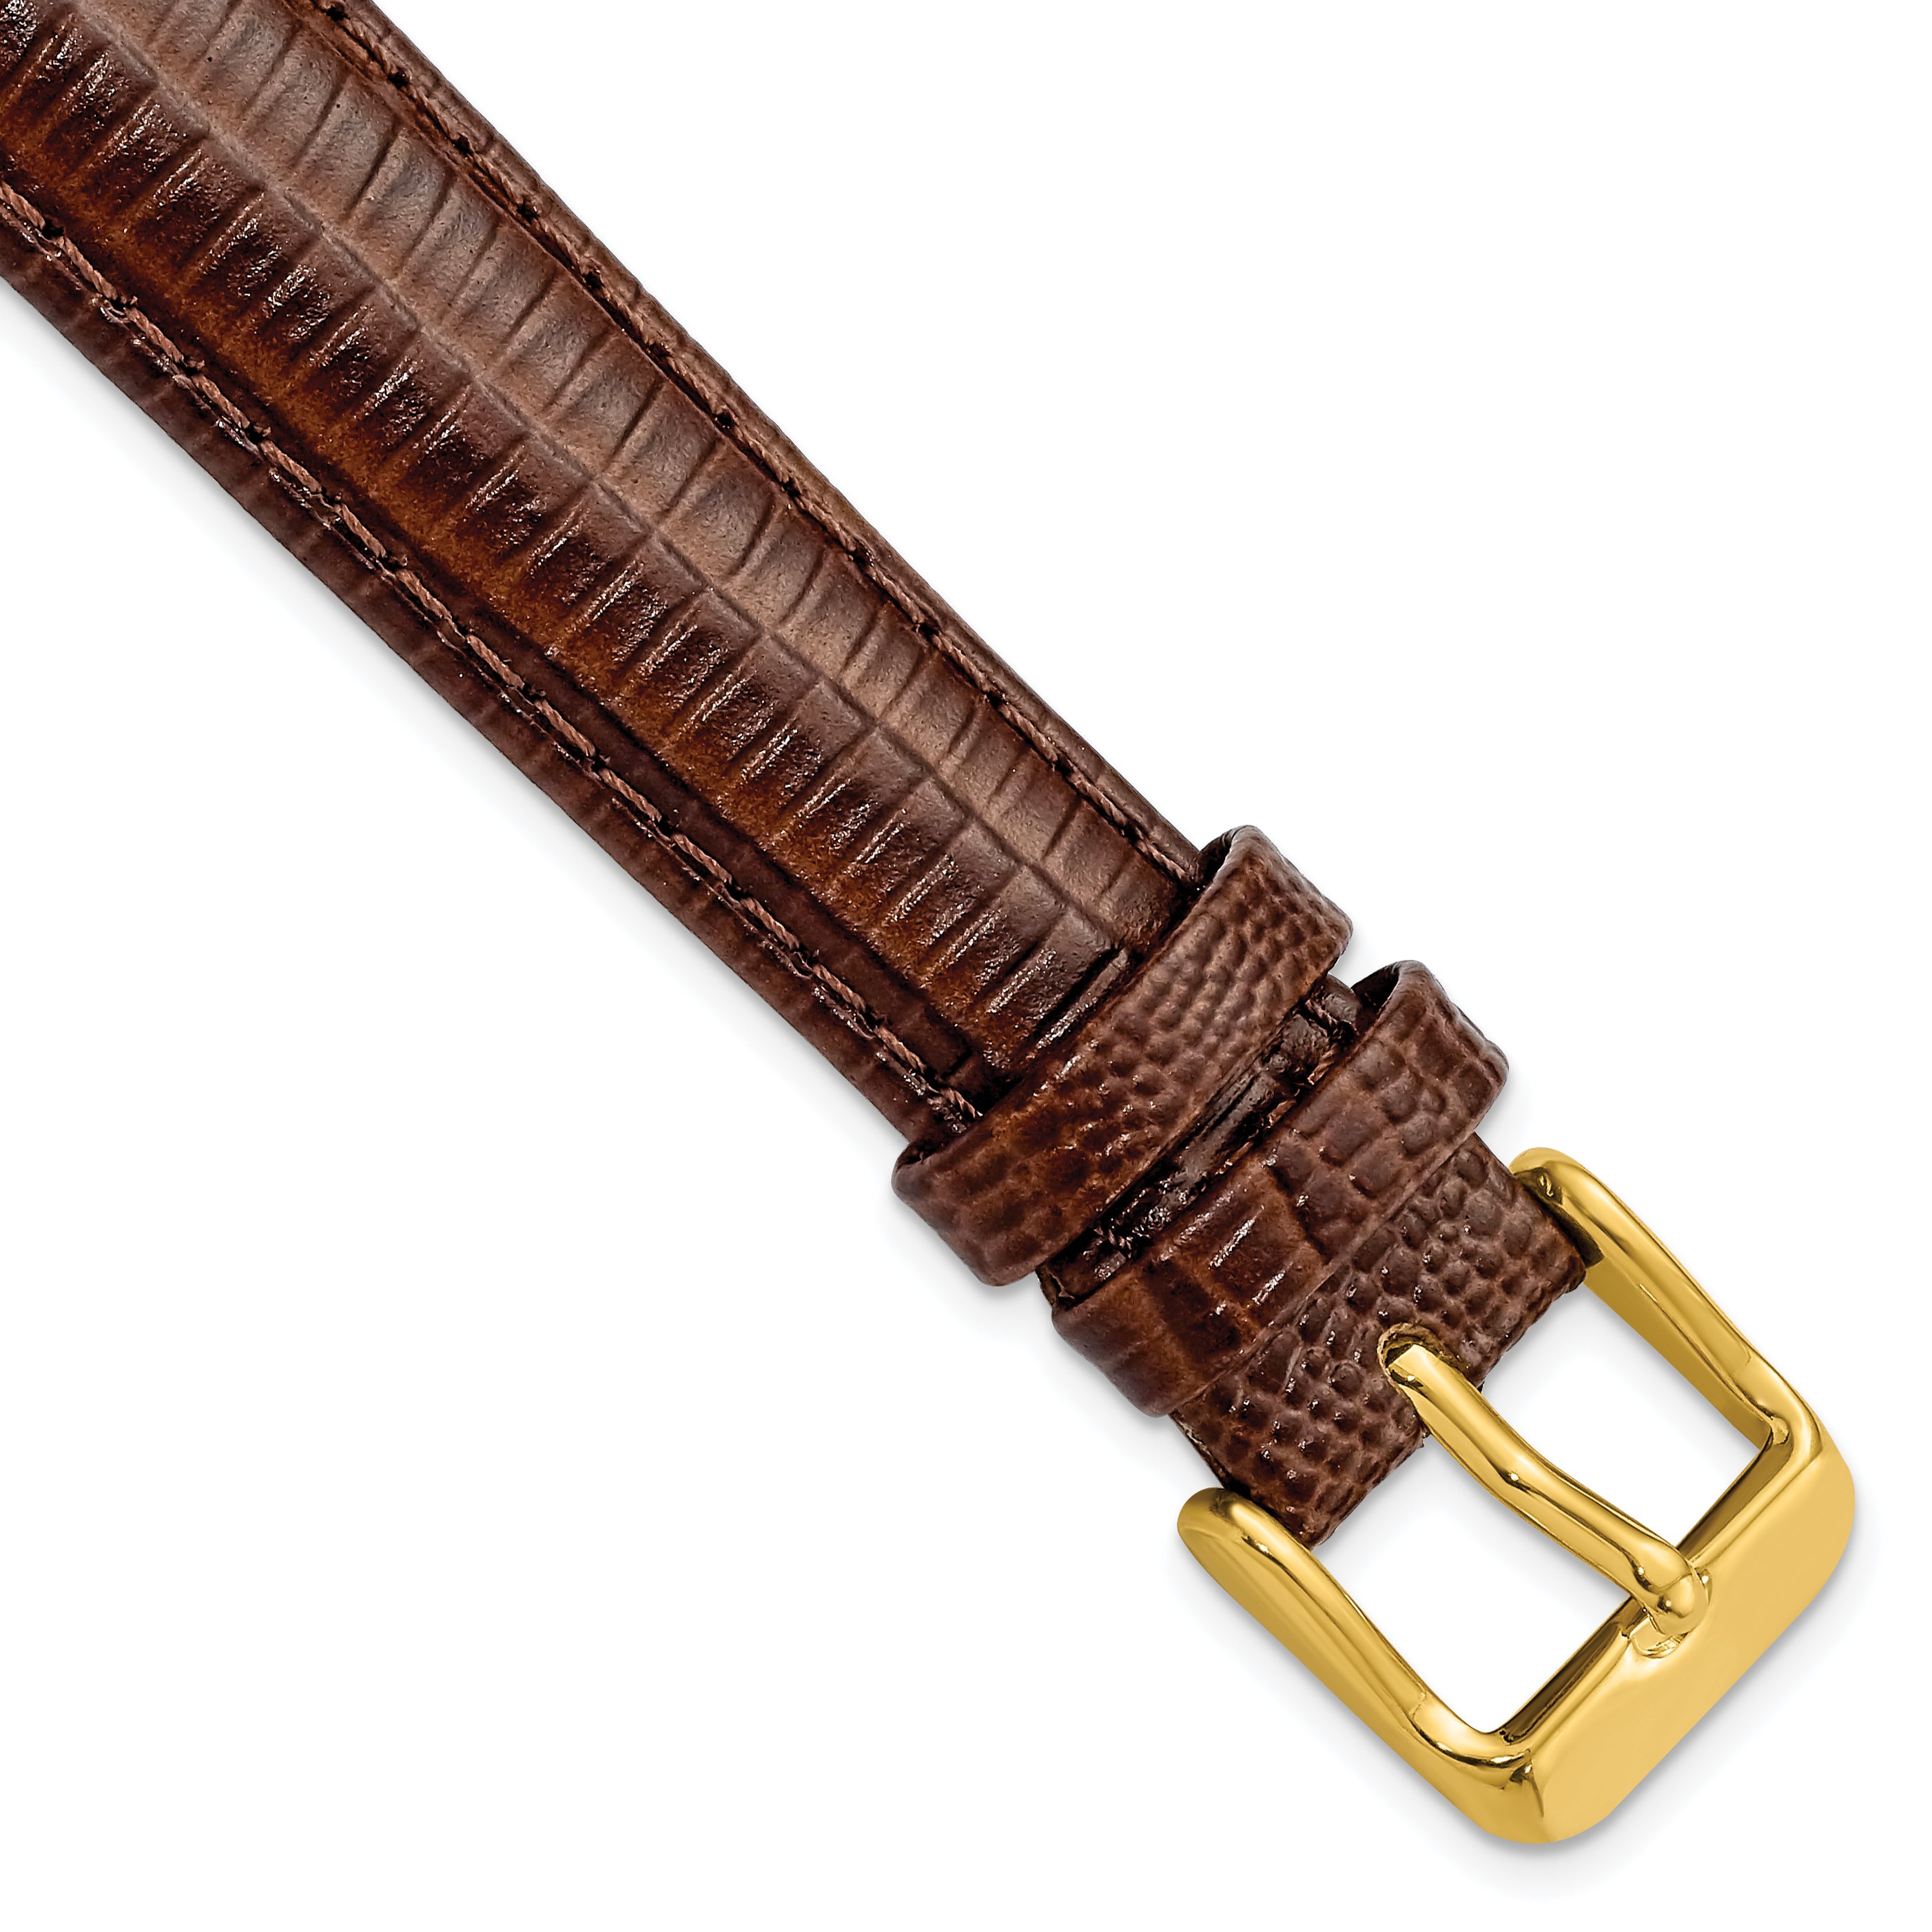 DeBeer 16mm Havana Teju Liz Grain Leather with Gold-tone Buckle 7.5 inch Watch Band